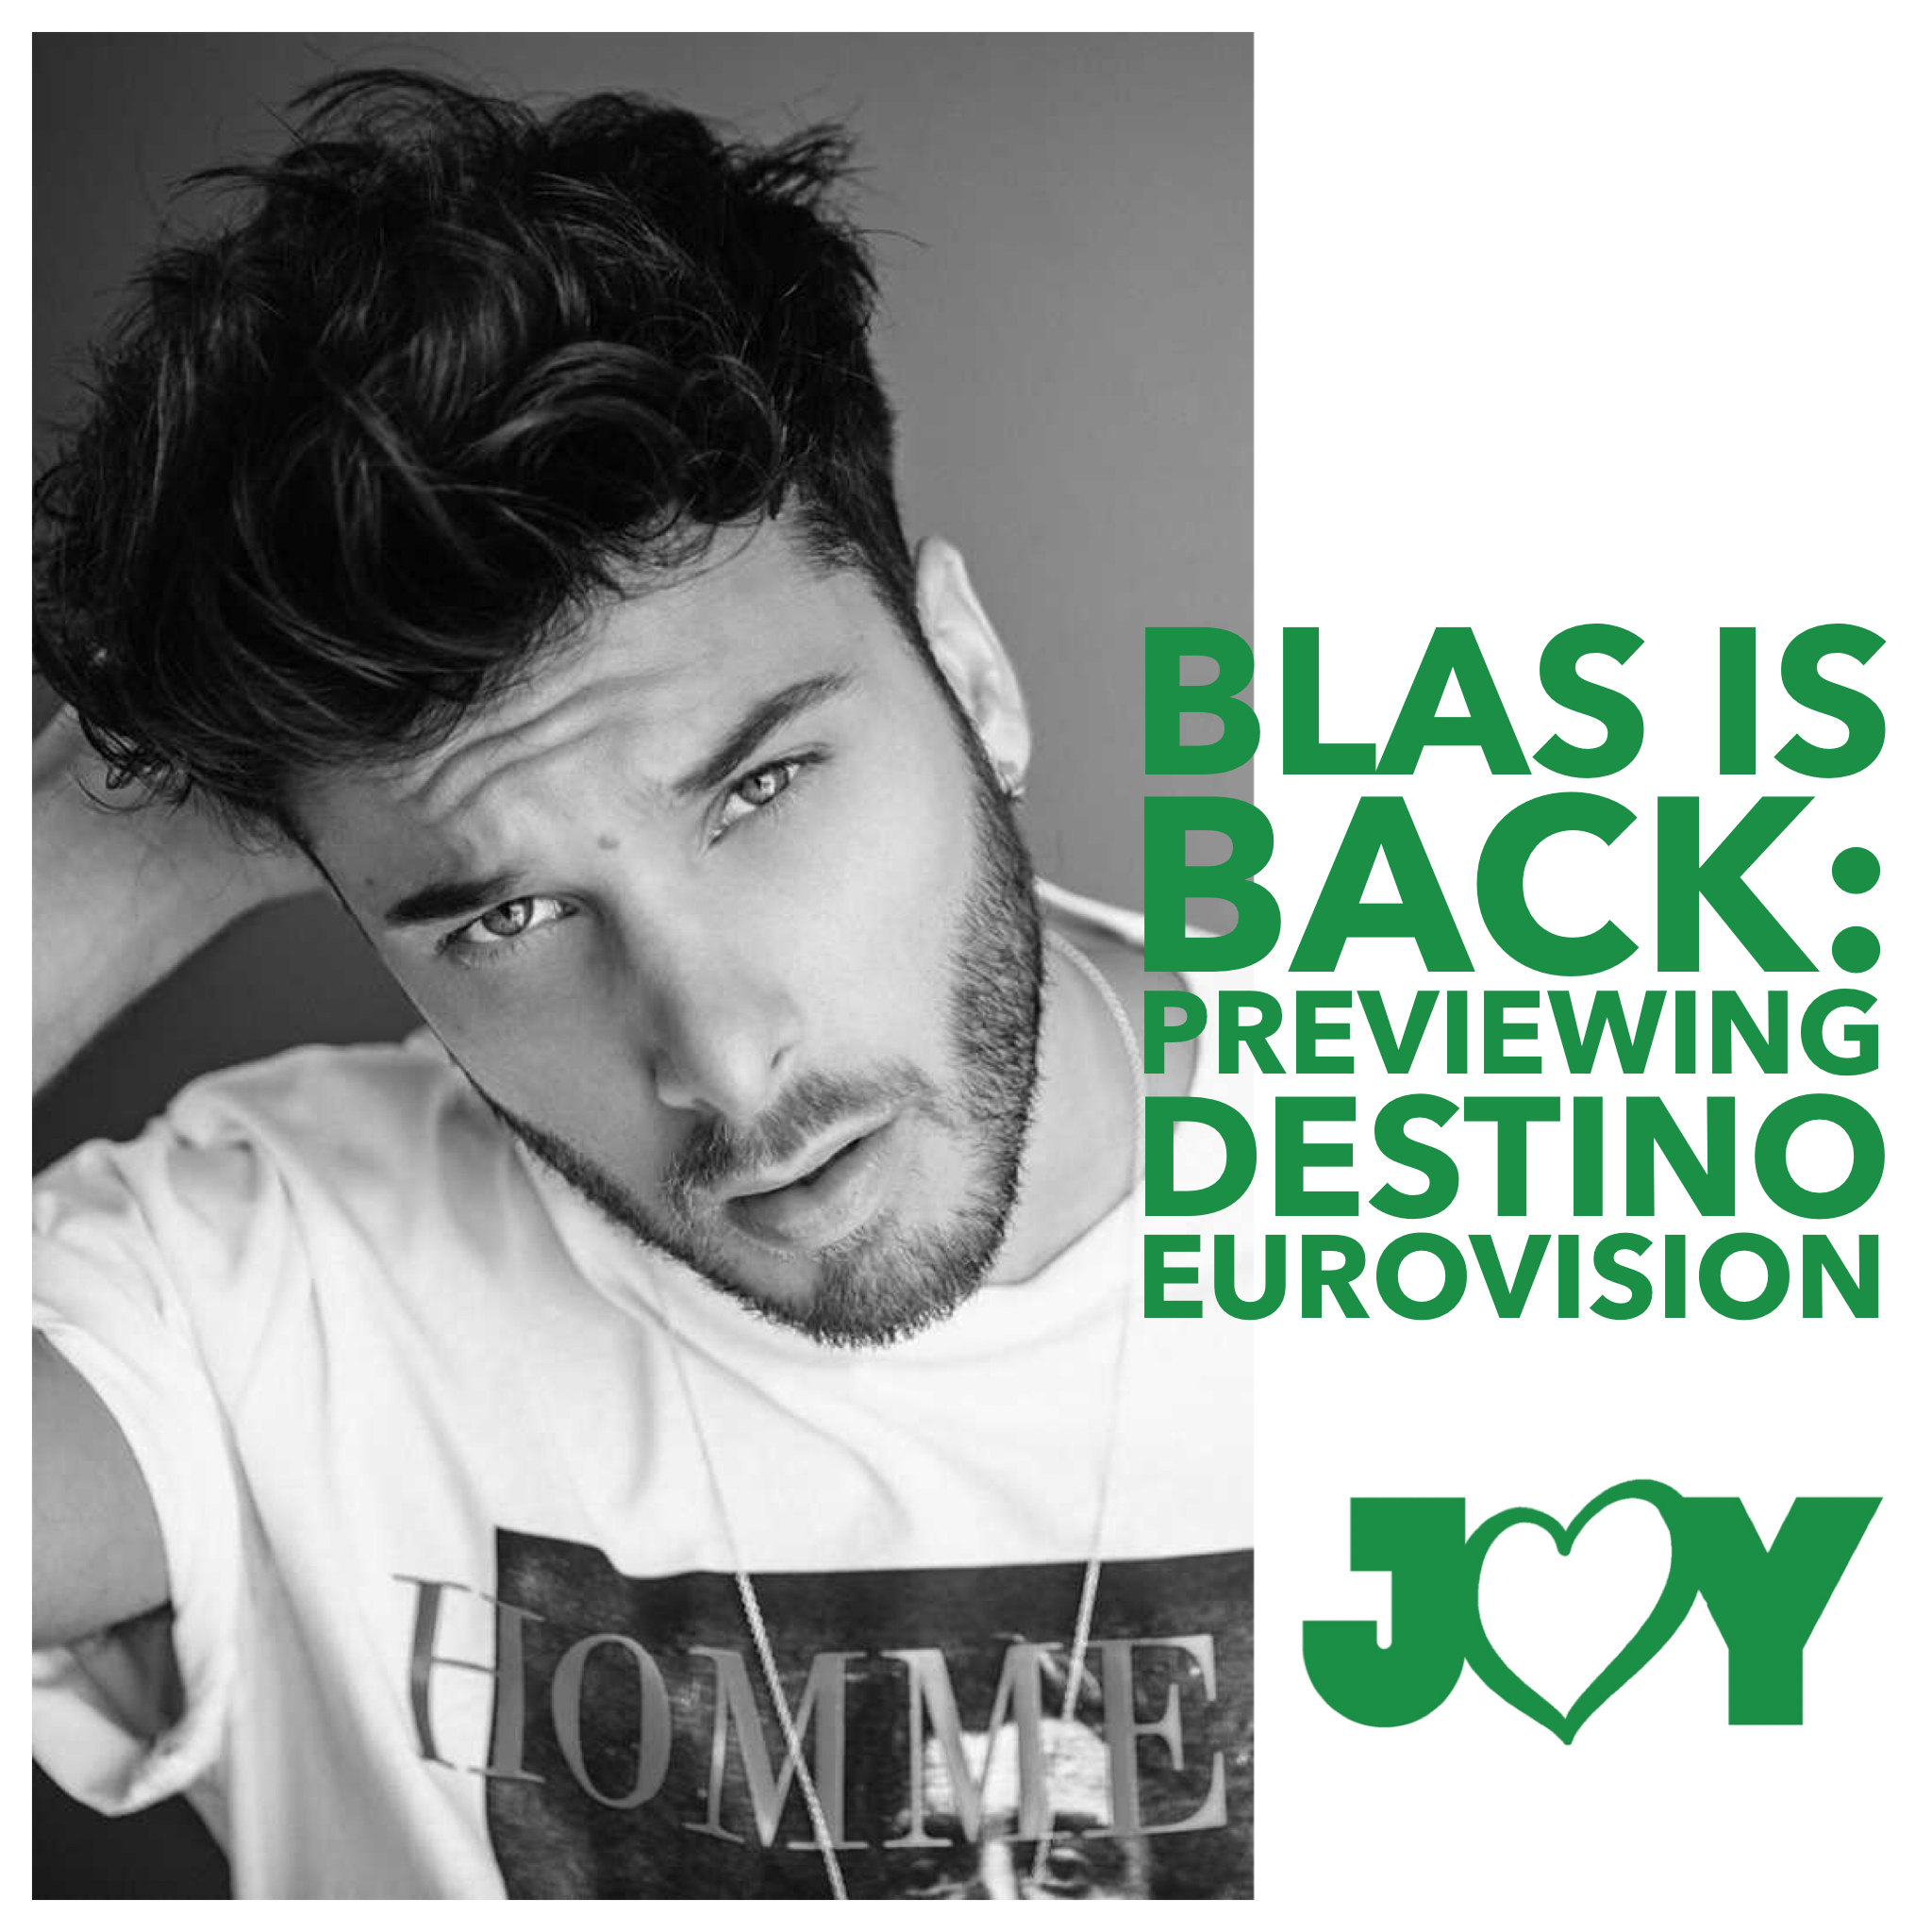 🇪🇸 Blas is back: Previewing Destino Eurovision 2021